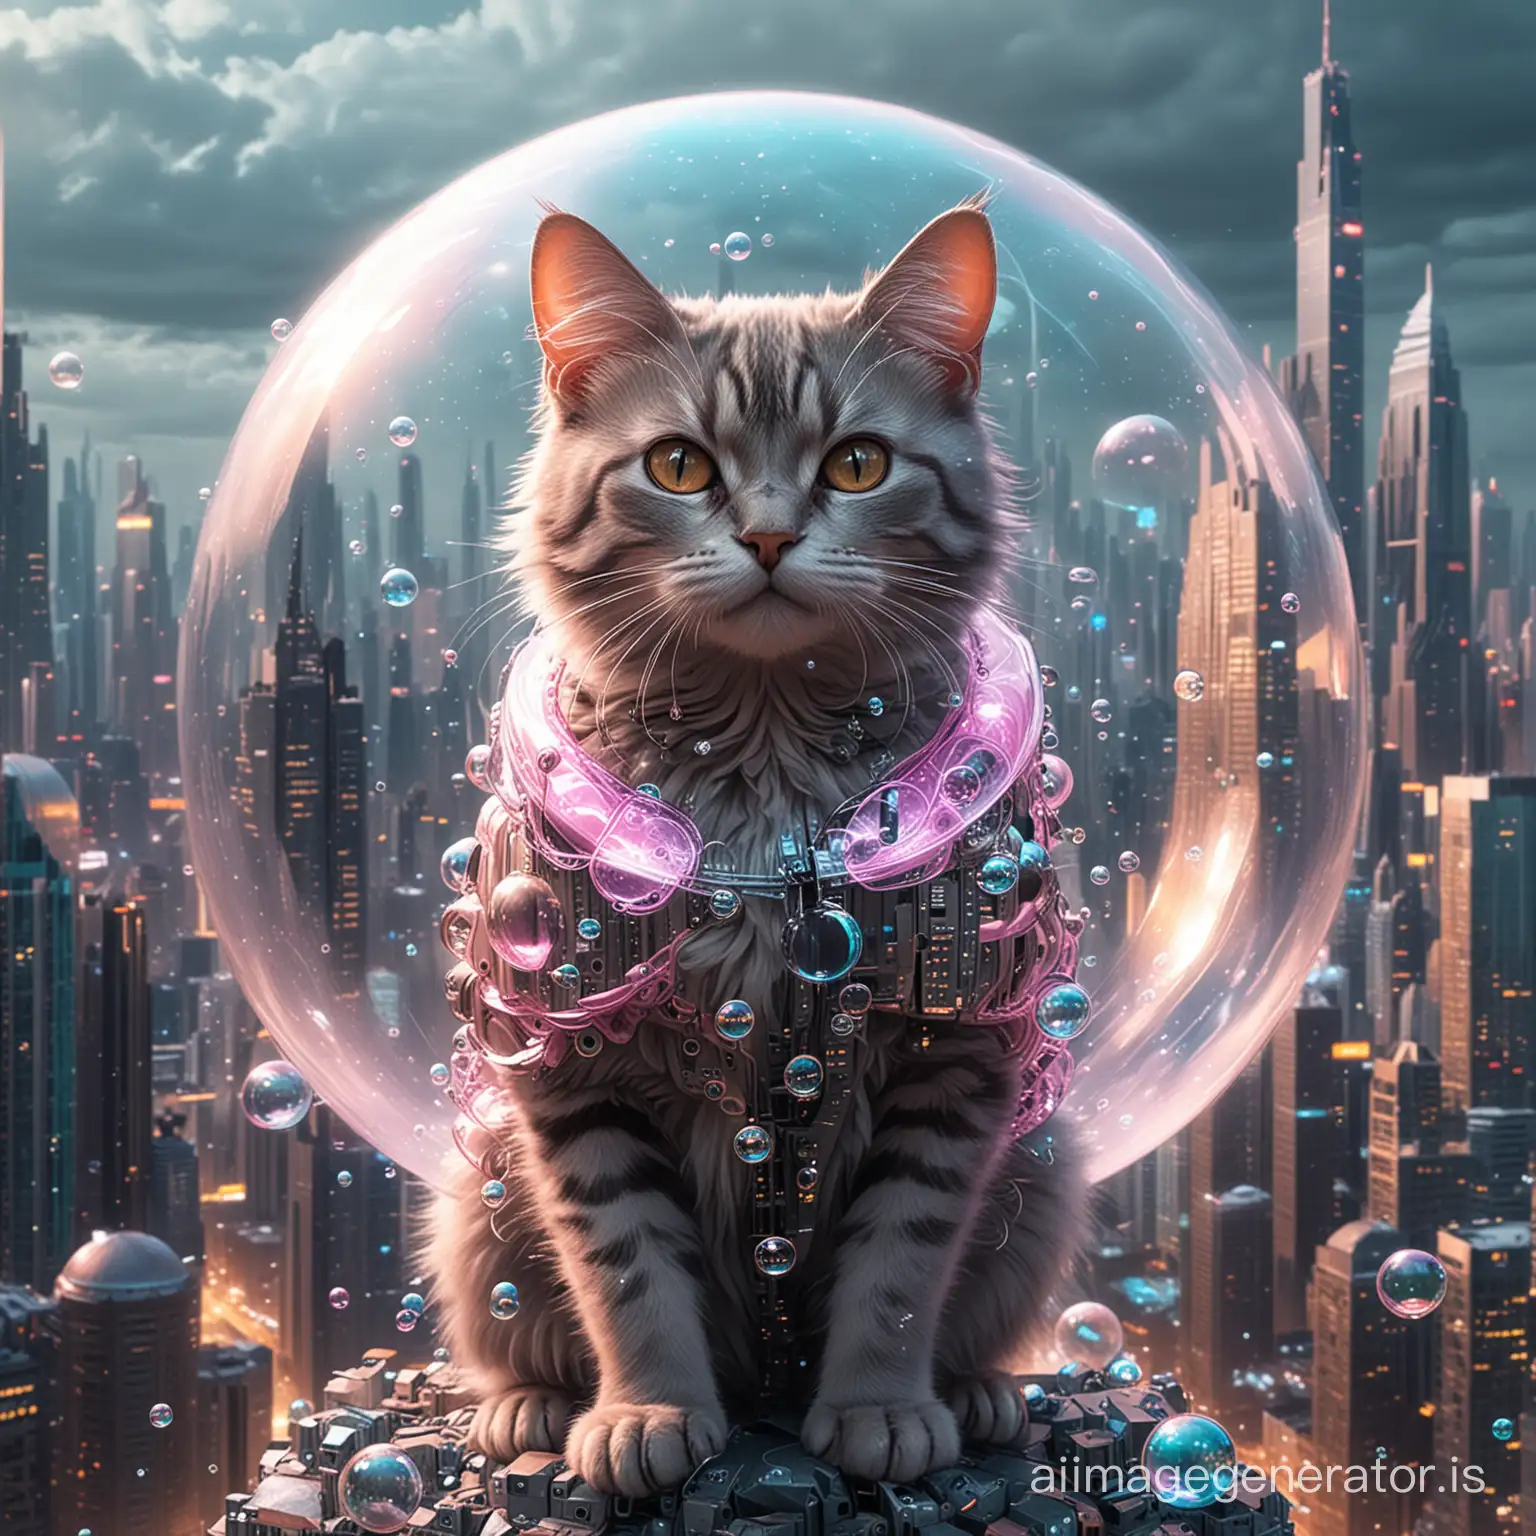 Futuristic-Cyberpunk-Cat-Encased-in-Shimmering-Bubbles-amidst-Urban-Skyscrapers